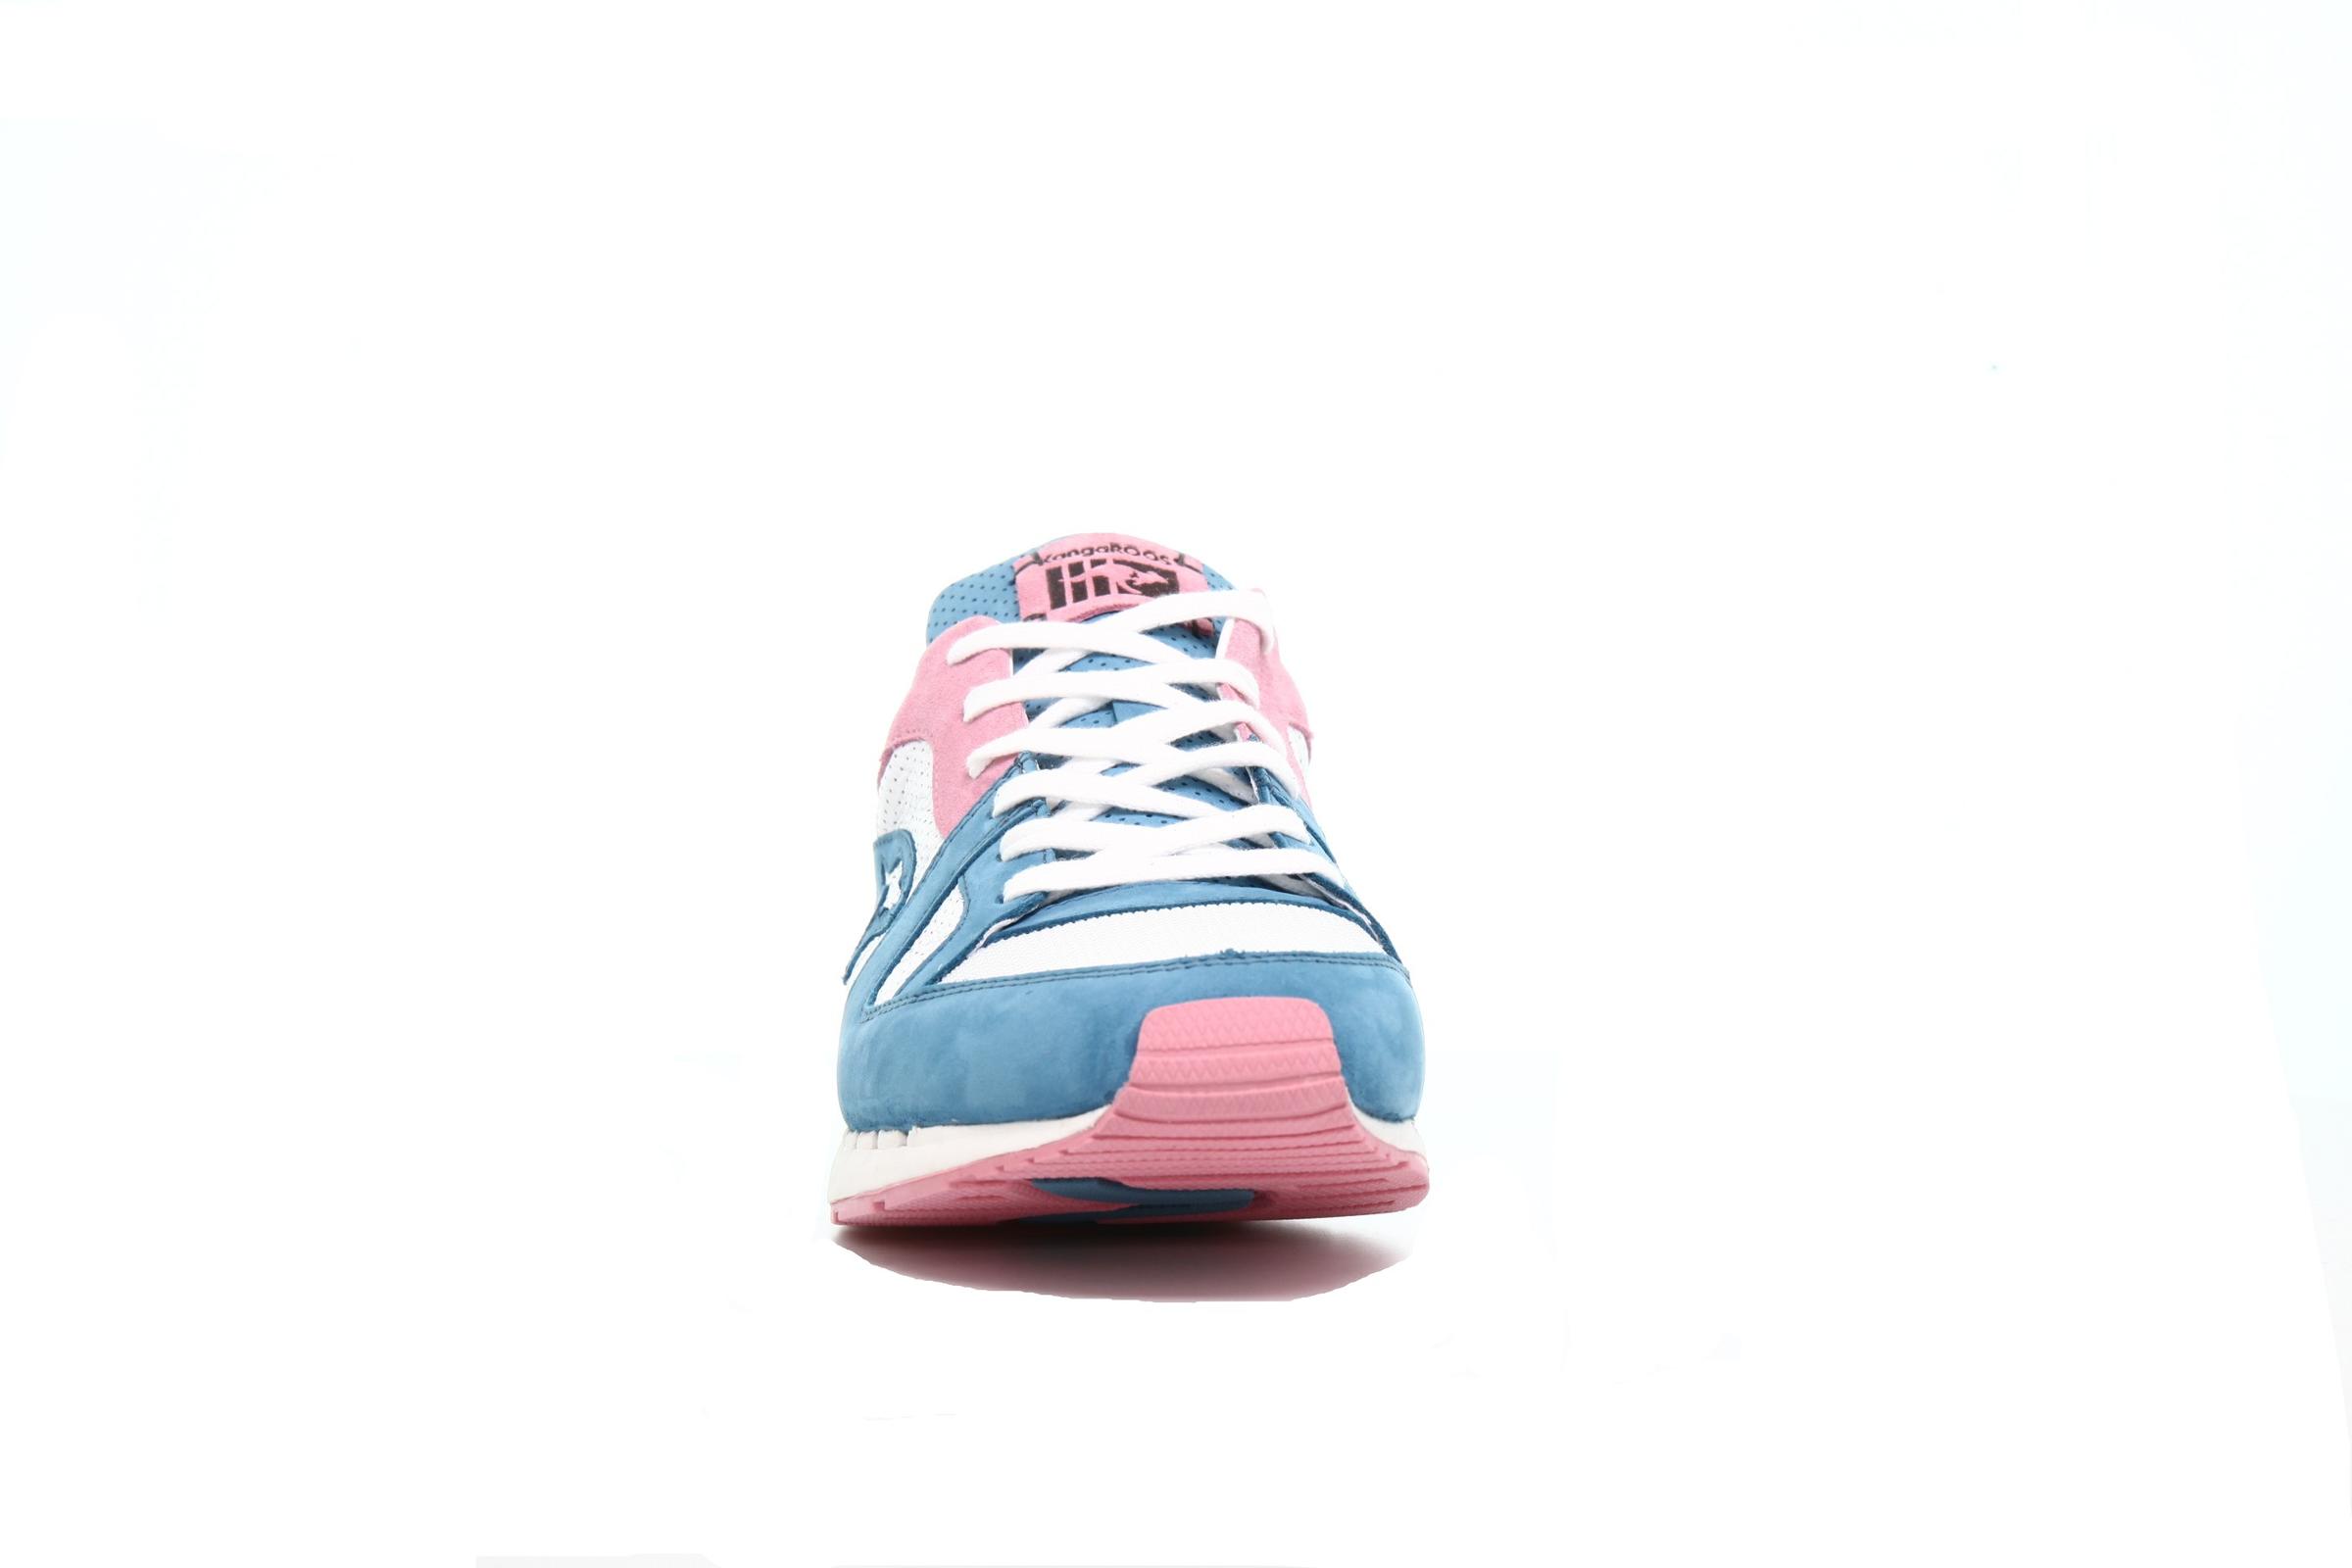 KangaROOS x Sneakerholics "Blue Toe"